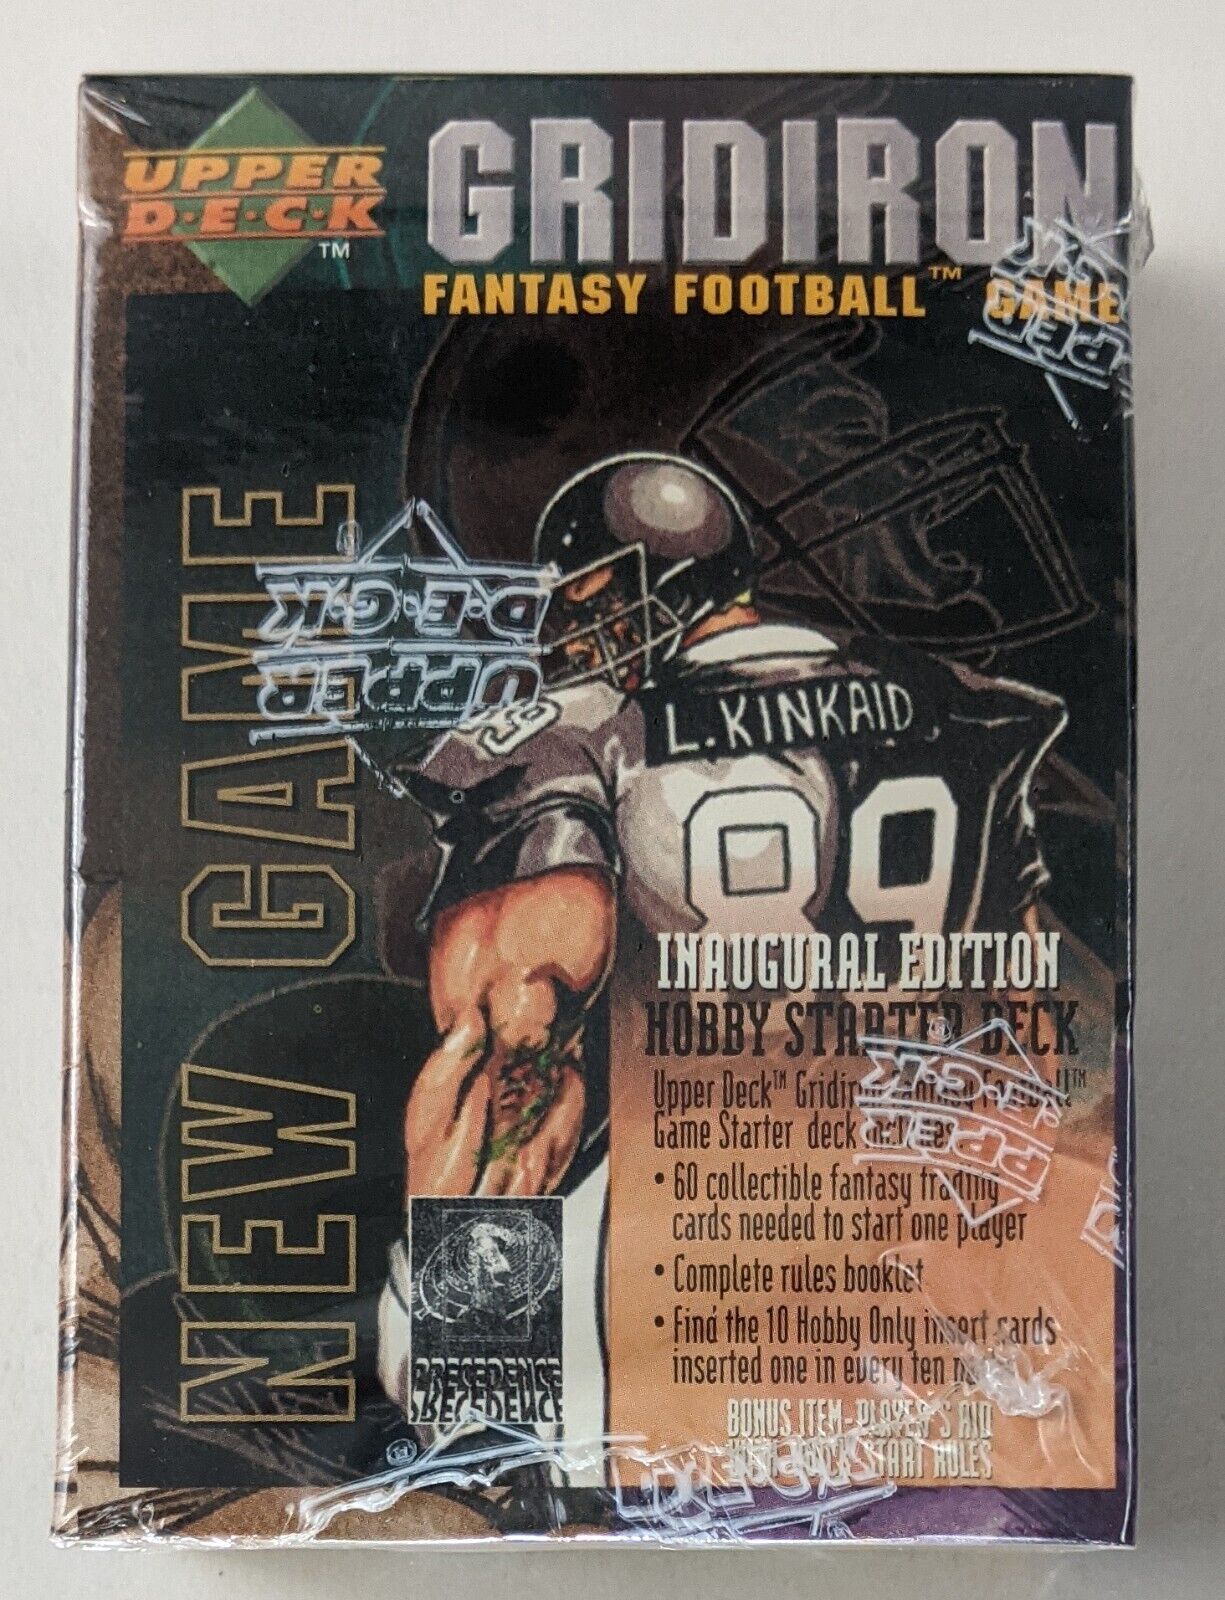 1995 Gridiron Fantasy Football Game Inaugural Edition Hobby Starter Deck Box